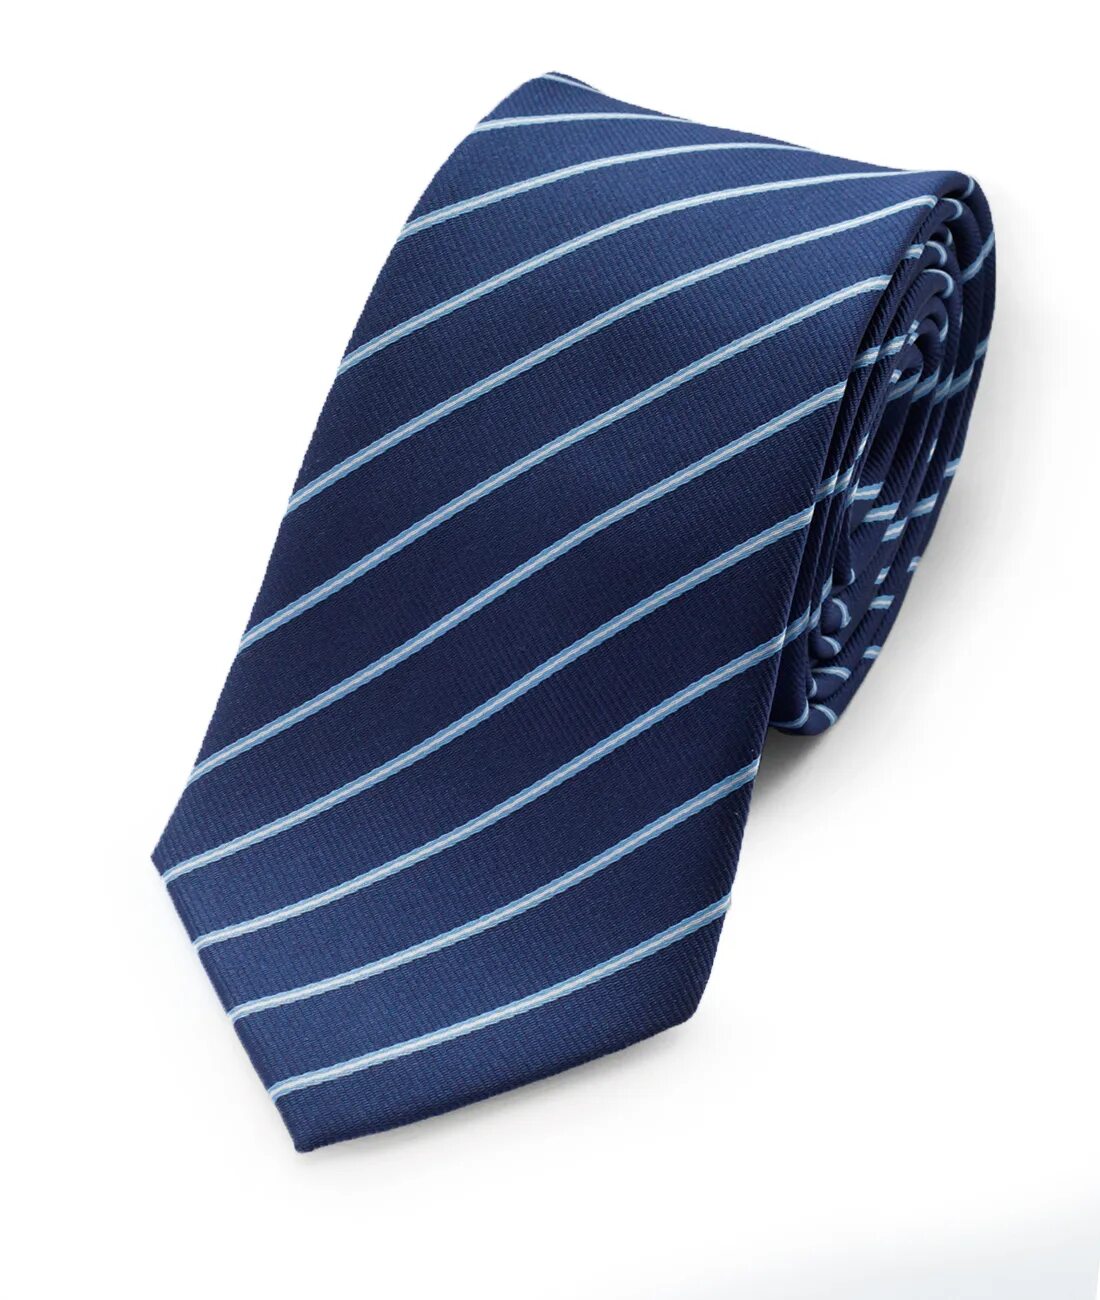 Синий галстук. Галстук (полоска). Полосатый галстук. Голубой галстук.